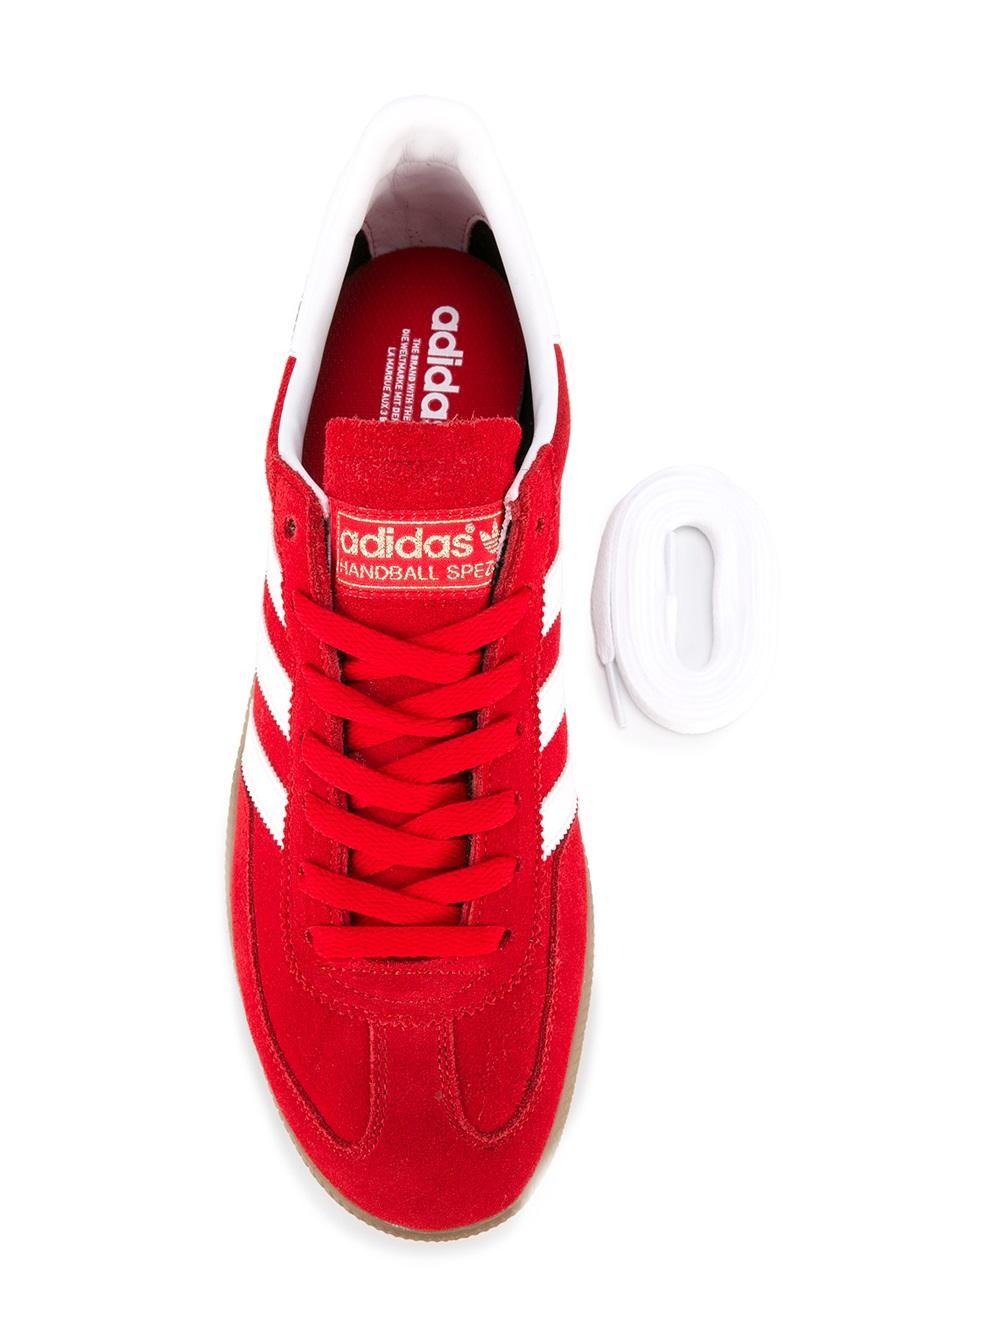 adidas Originals 'handball Spezial' Sneakers in Red for Men | Lyst